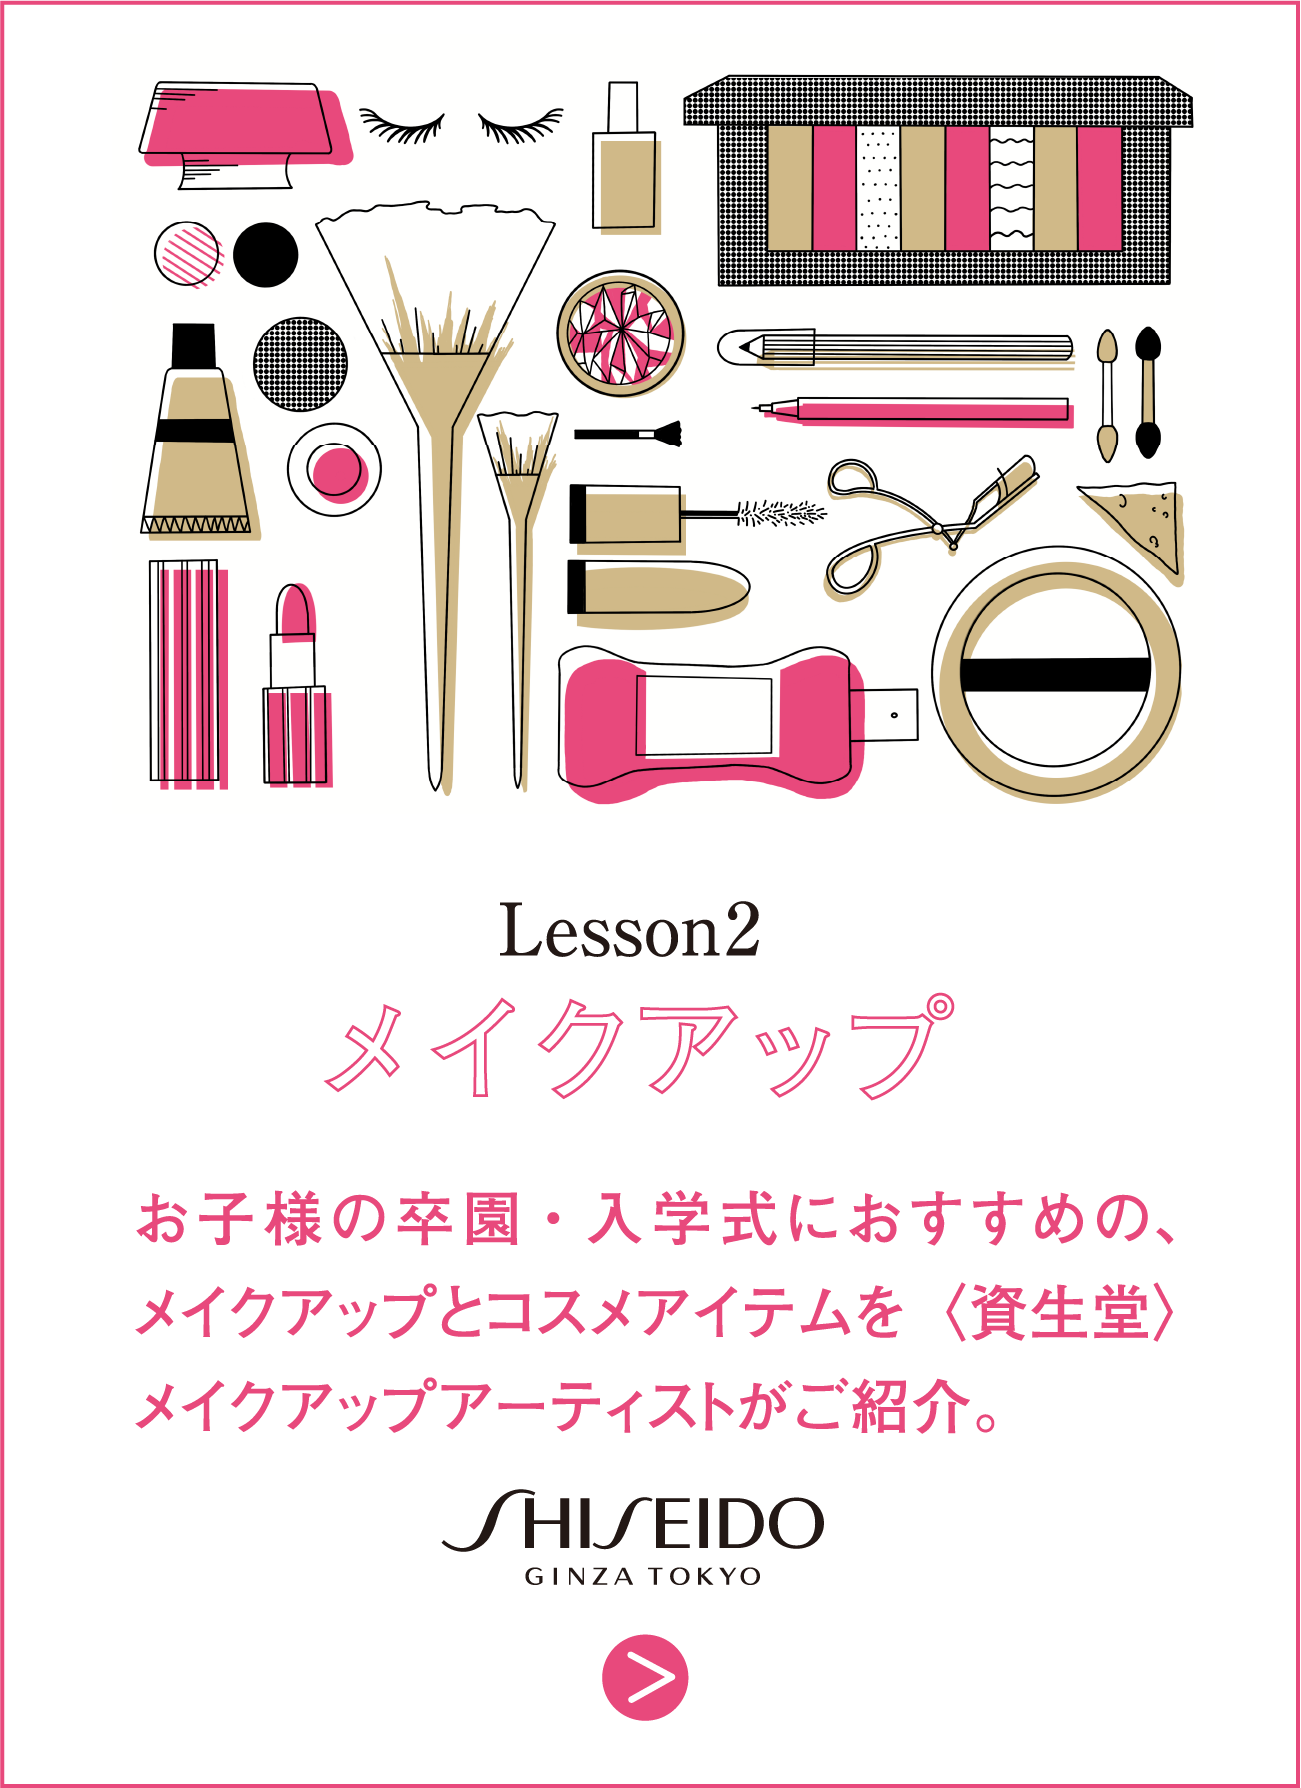 Lesson2 メイクアップ お子様の卒園・入学式におすすめの、メイクアップとコスメアイテムを〈資生堂〉メイクアップアーティストがご紹介。 SHISEIDO GINZA TOKYO